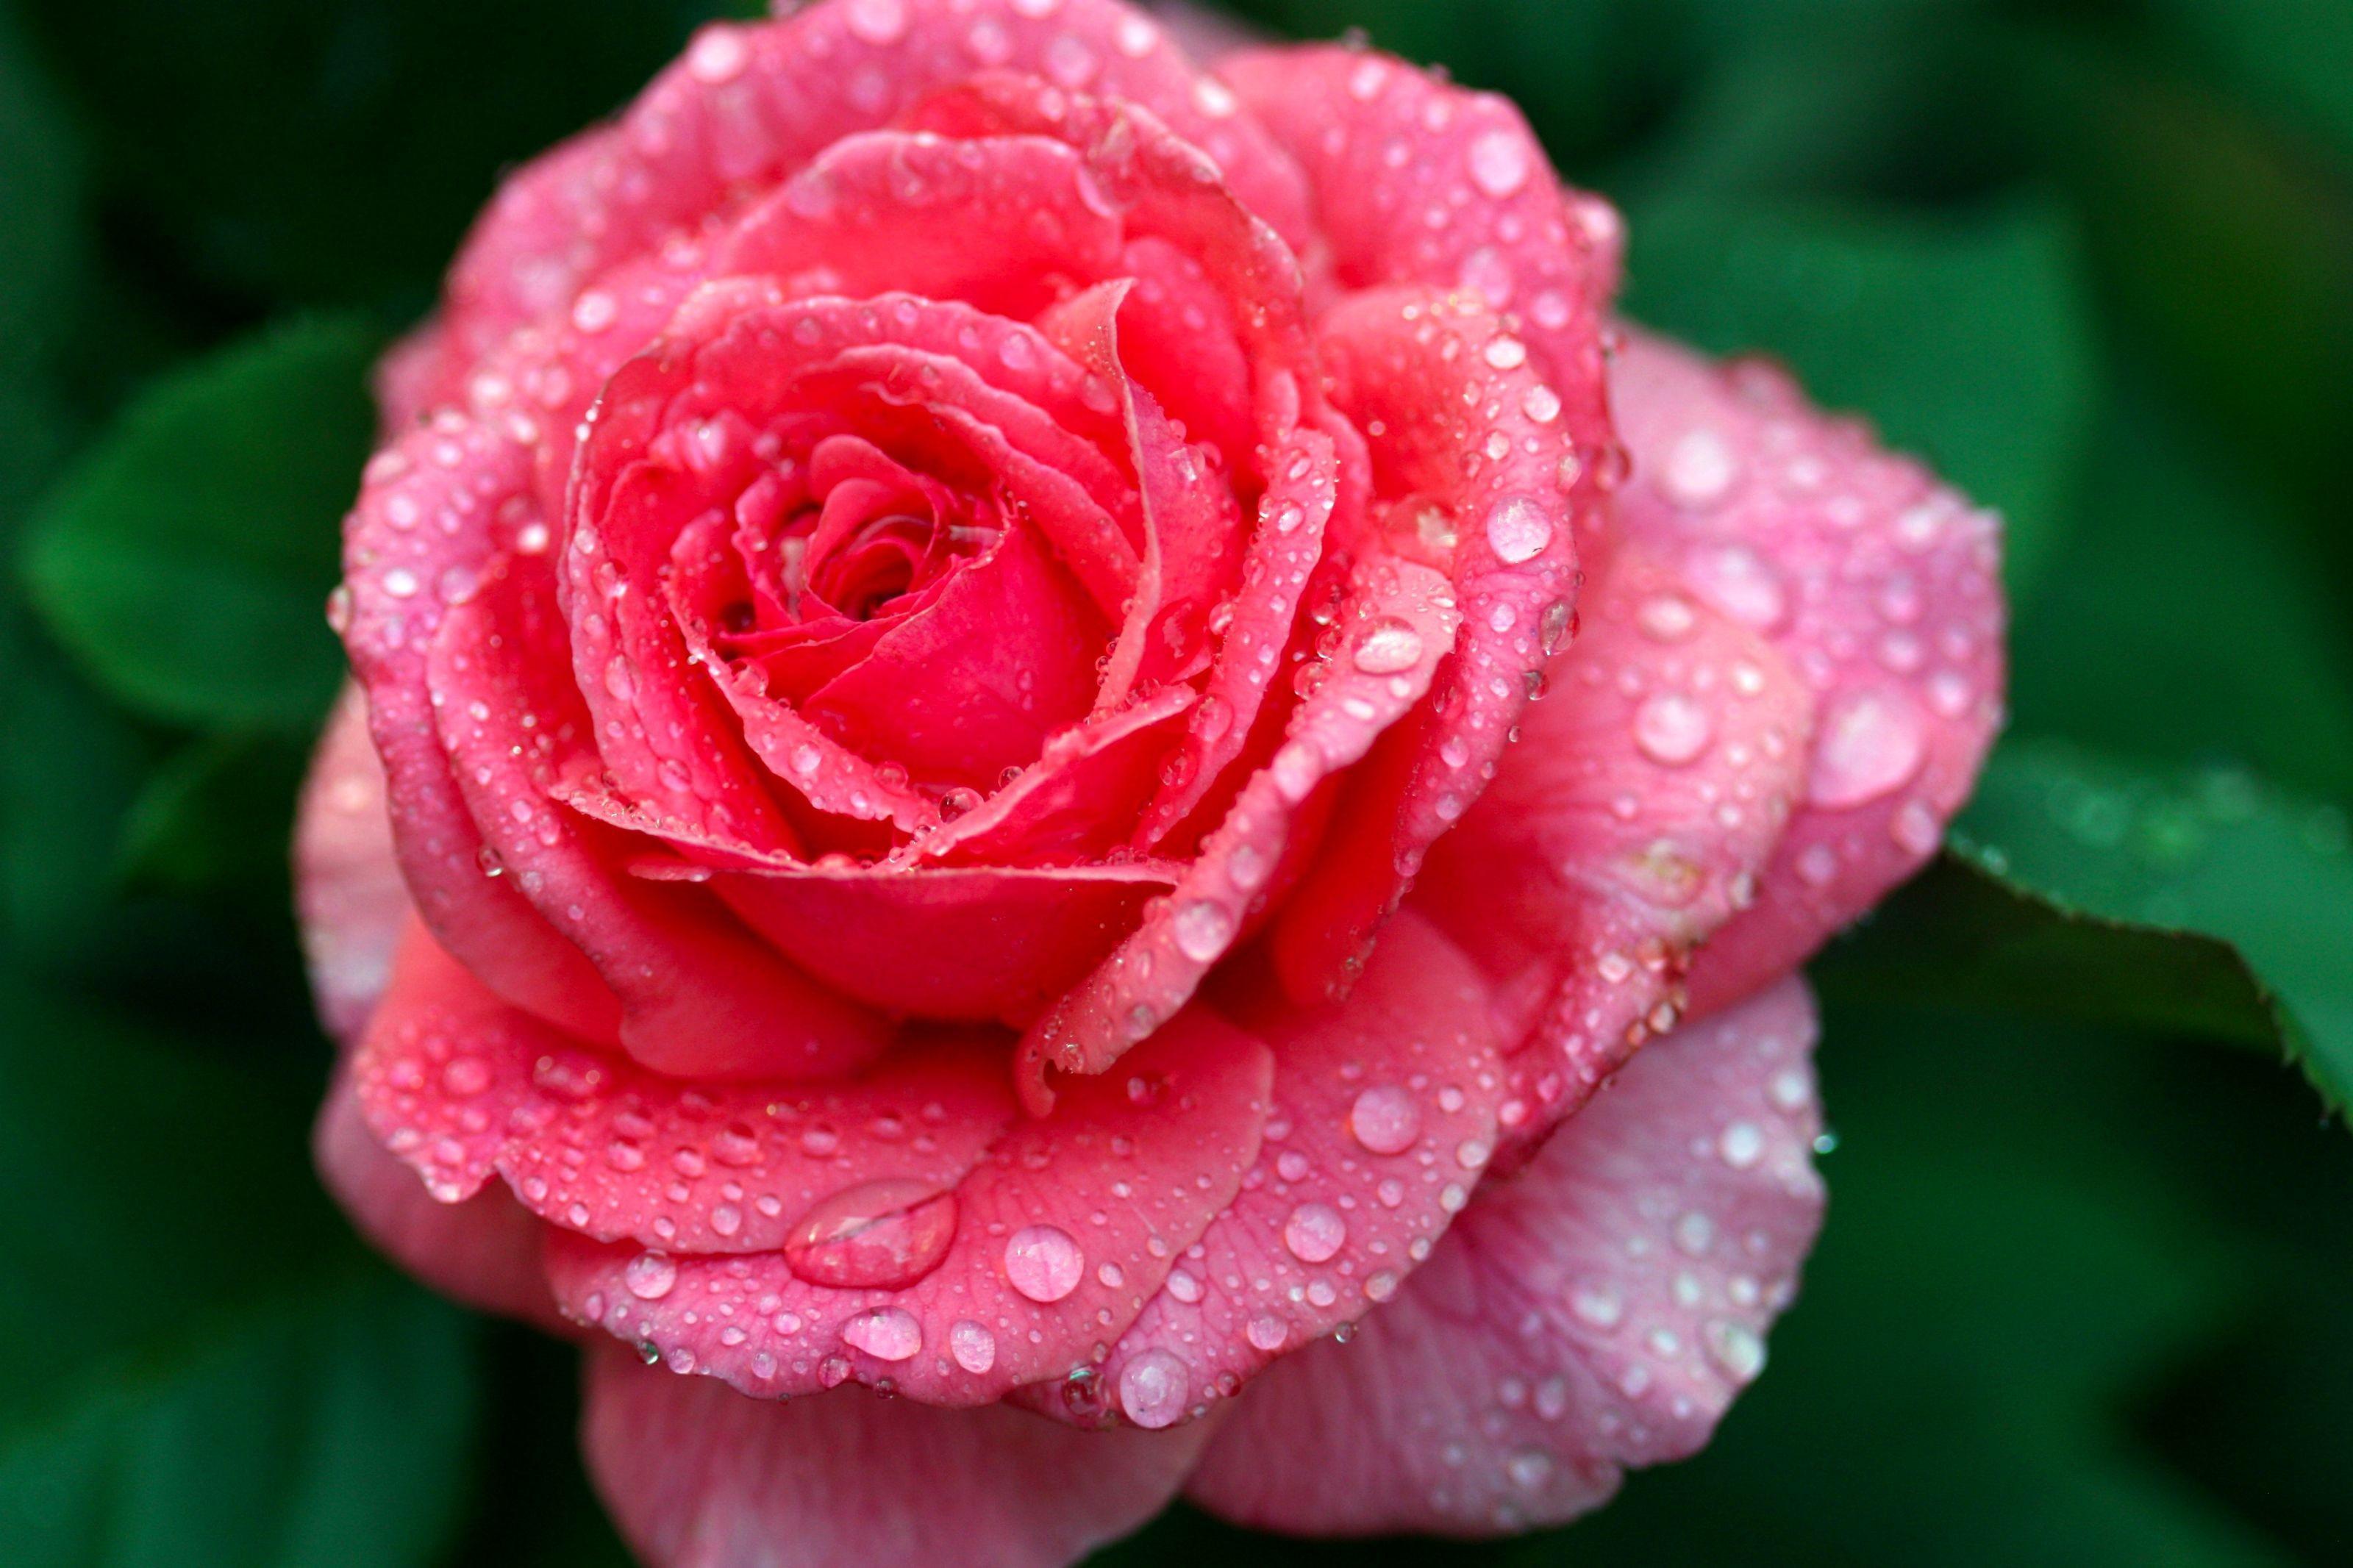 _pink_rose_and_drops-1440607.jpg